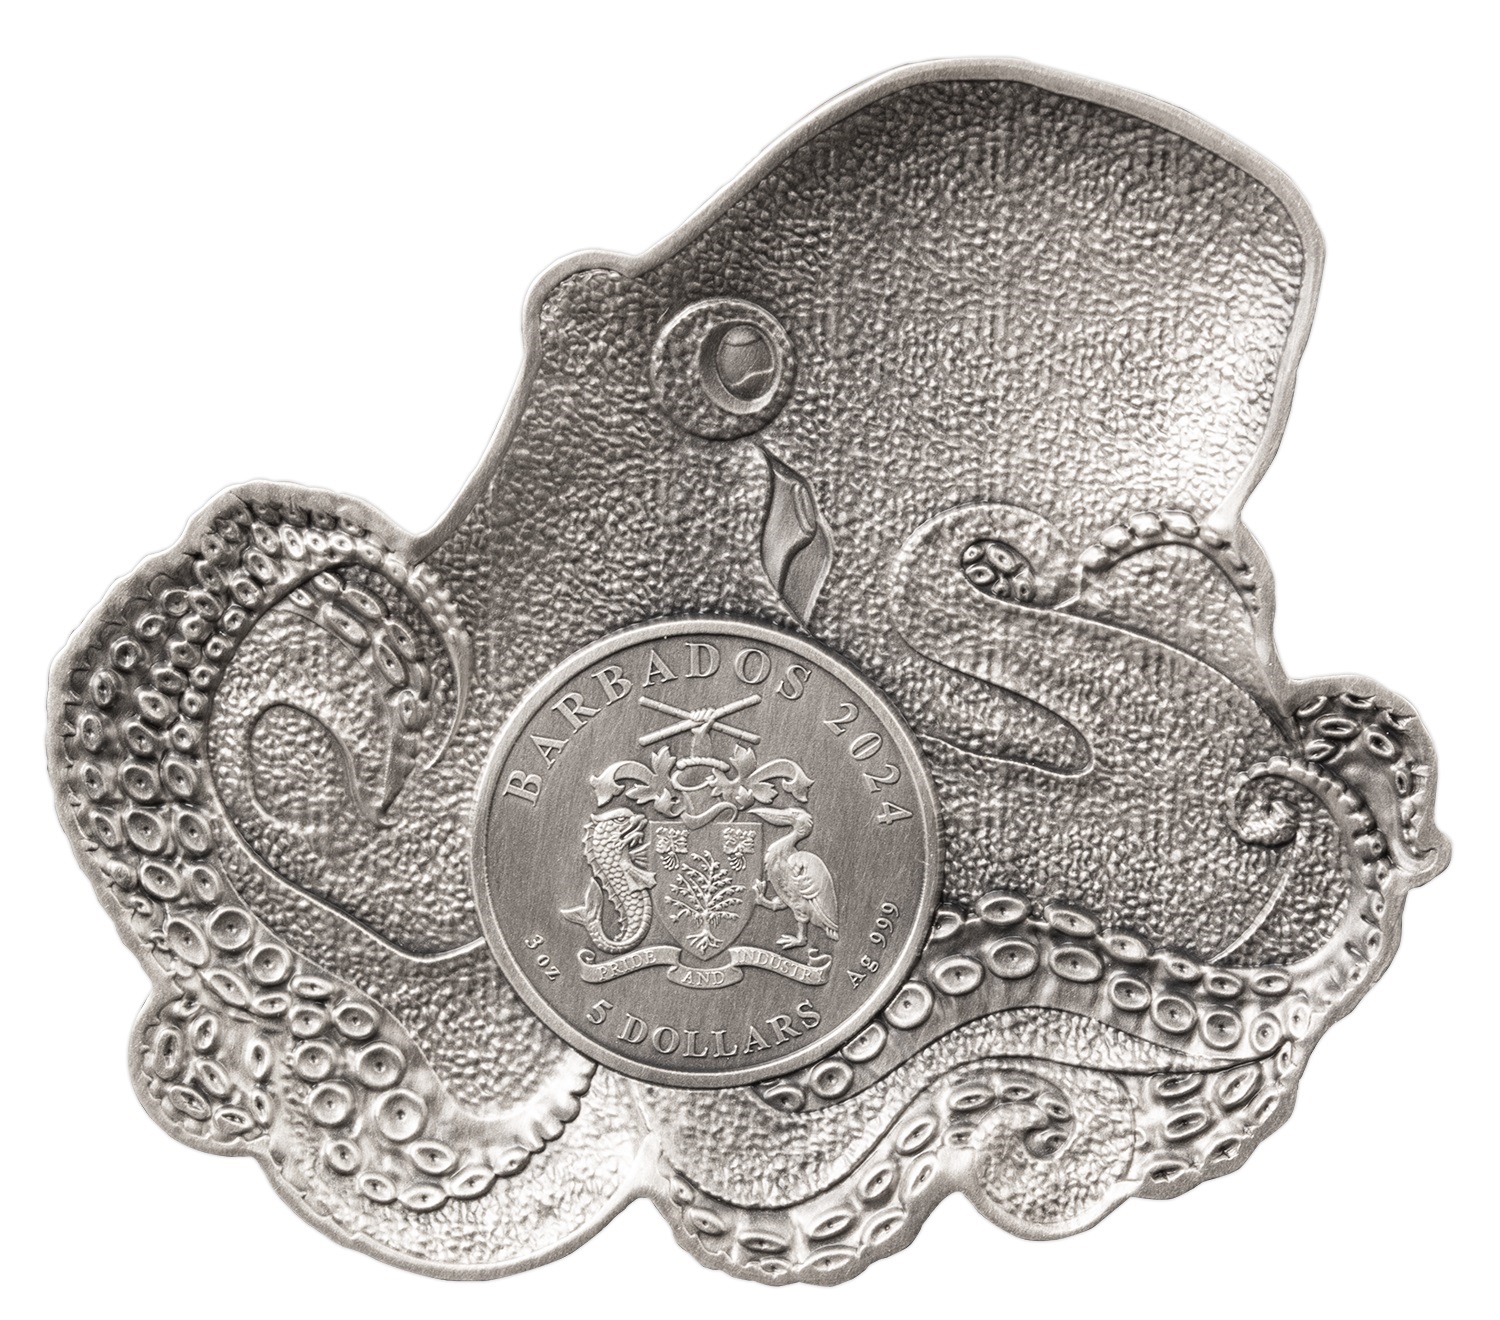 (W022.5.D.2024.3.oz.Ag.1583140116) 5 Dollars Barbados 2024 3 oz Antique silver - The Octopus Obverse (zoom)